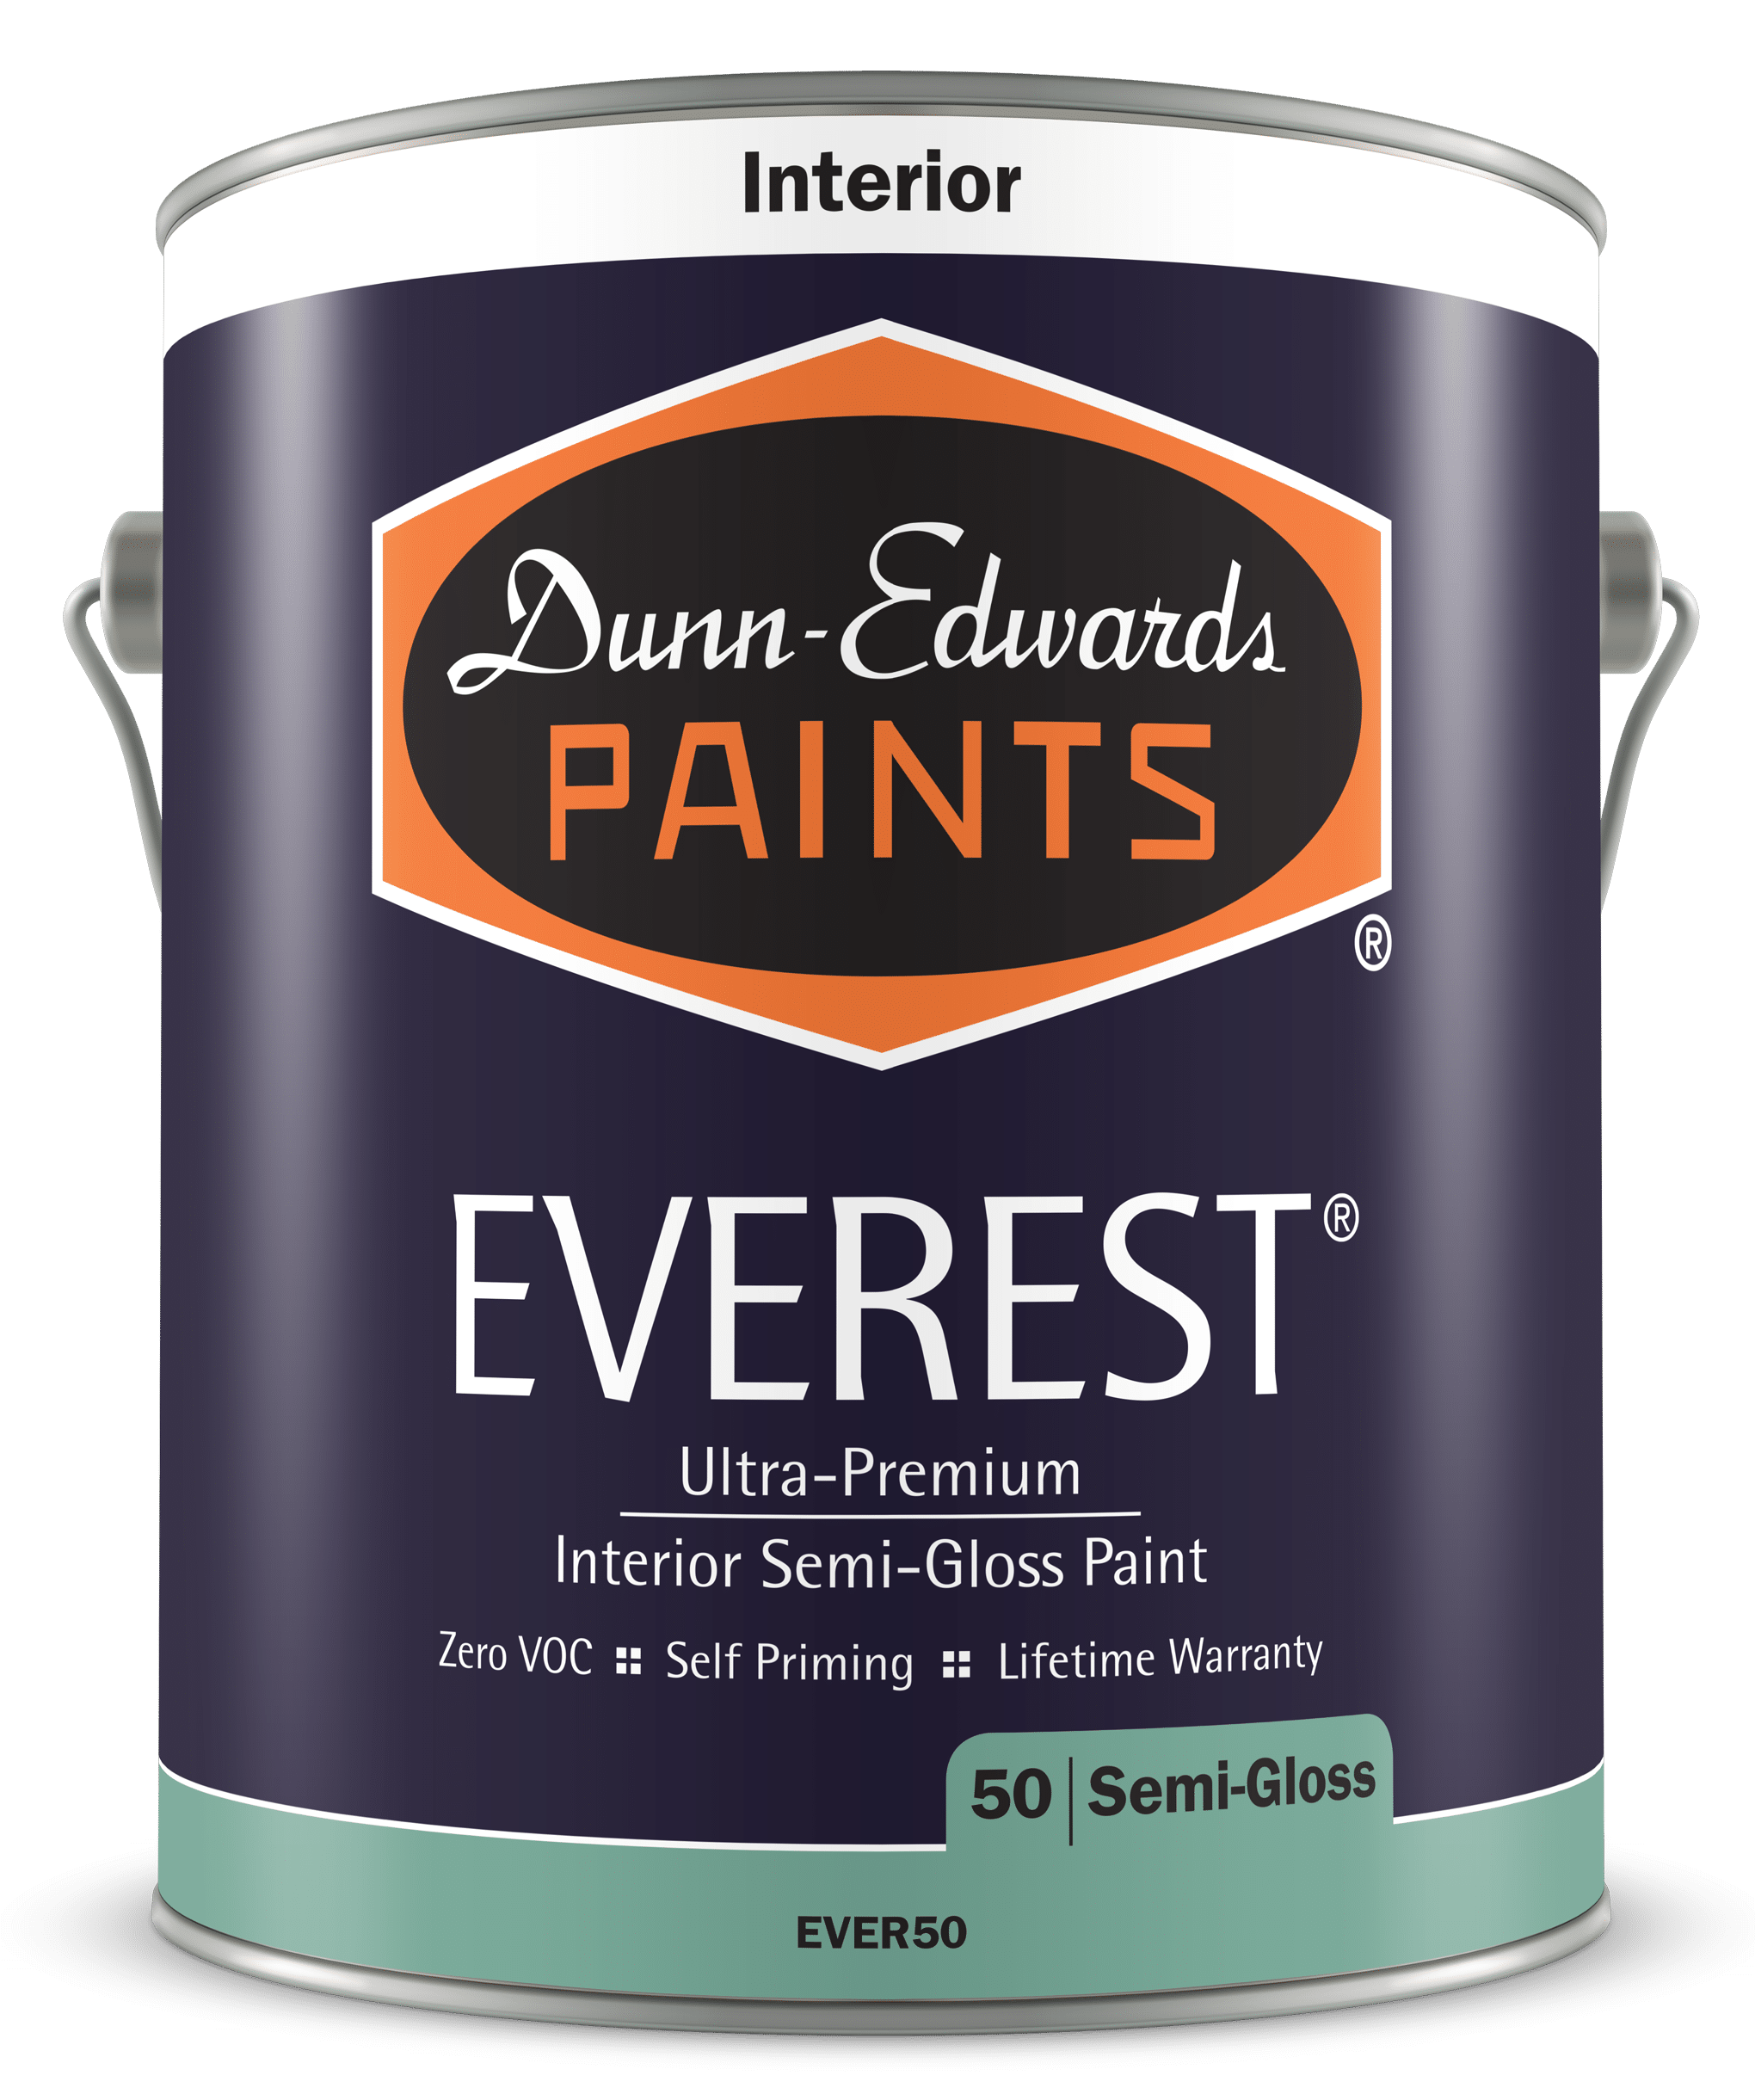 EVEREST Interior Semi-Gloss Paint Can